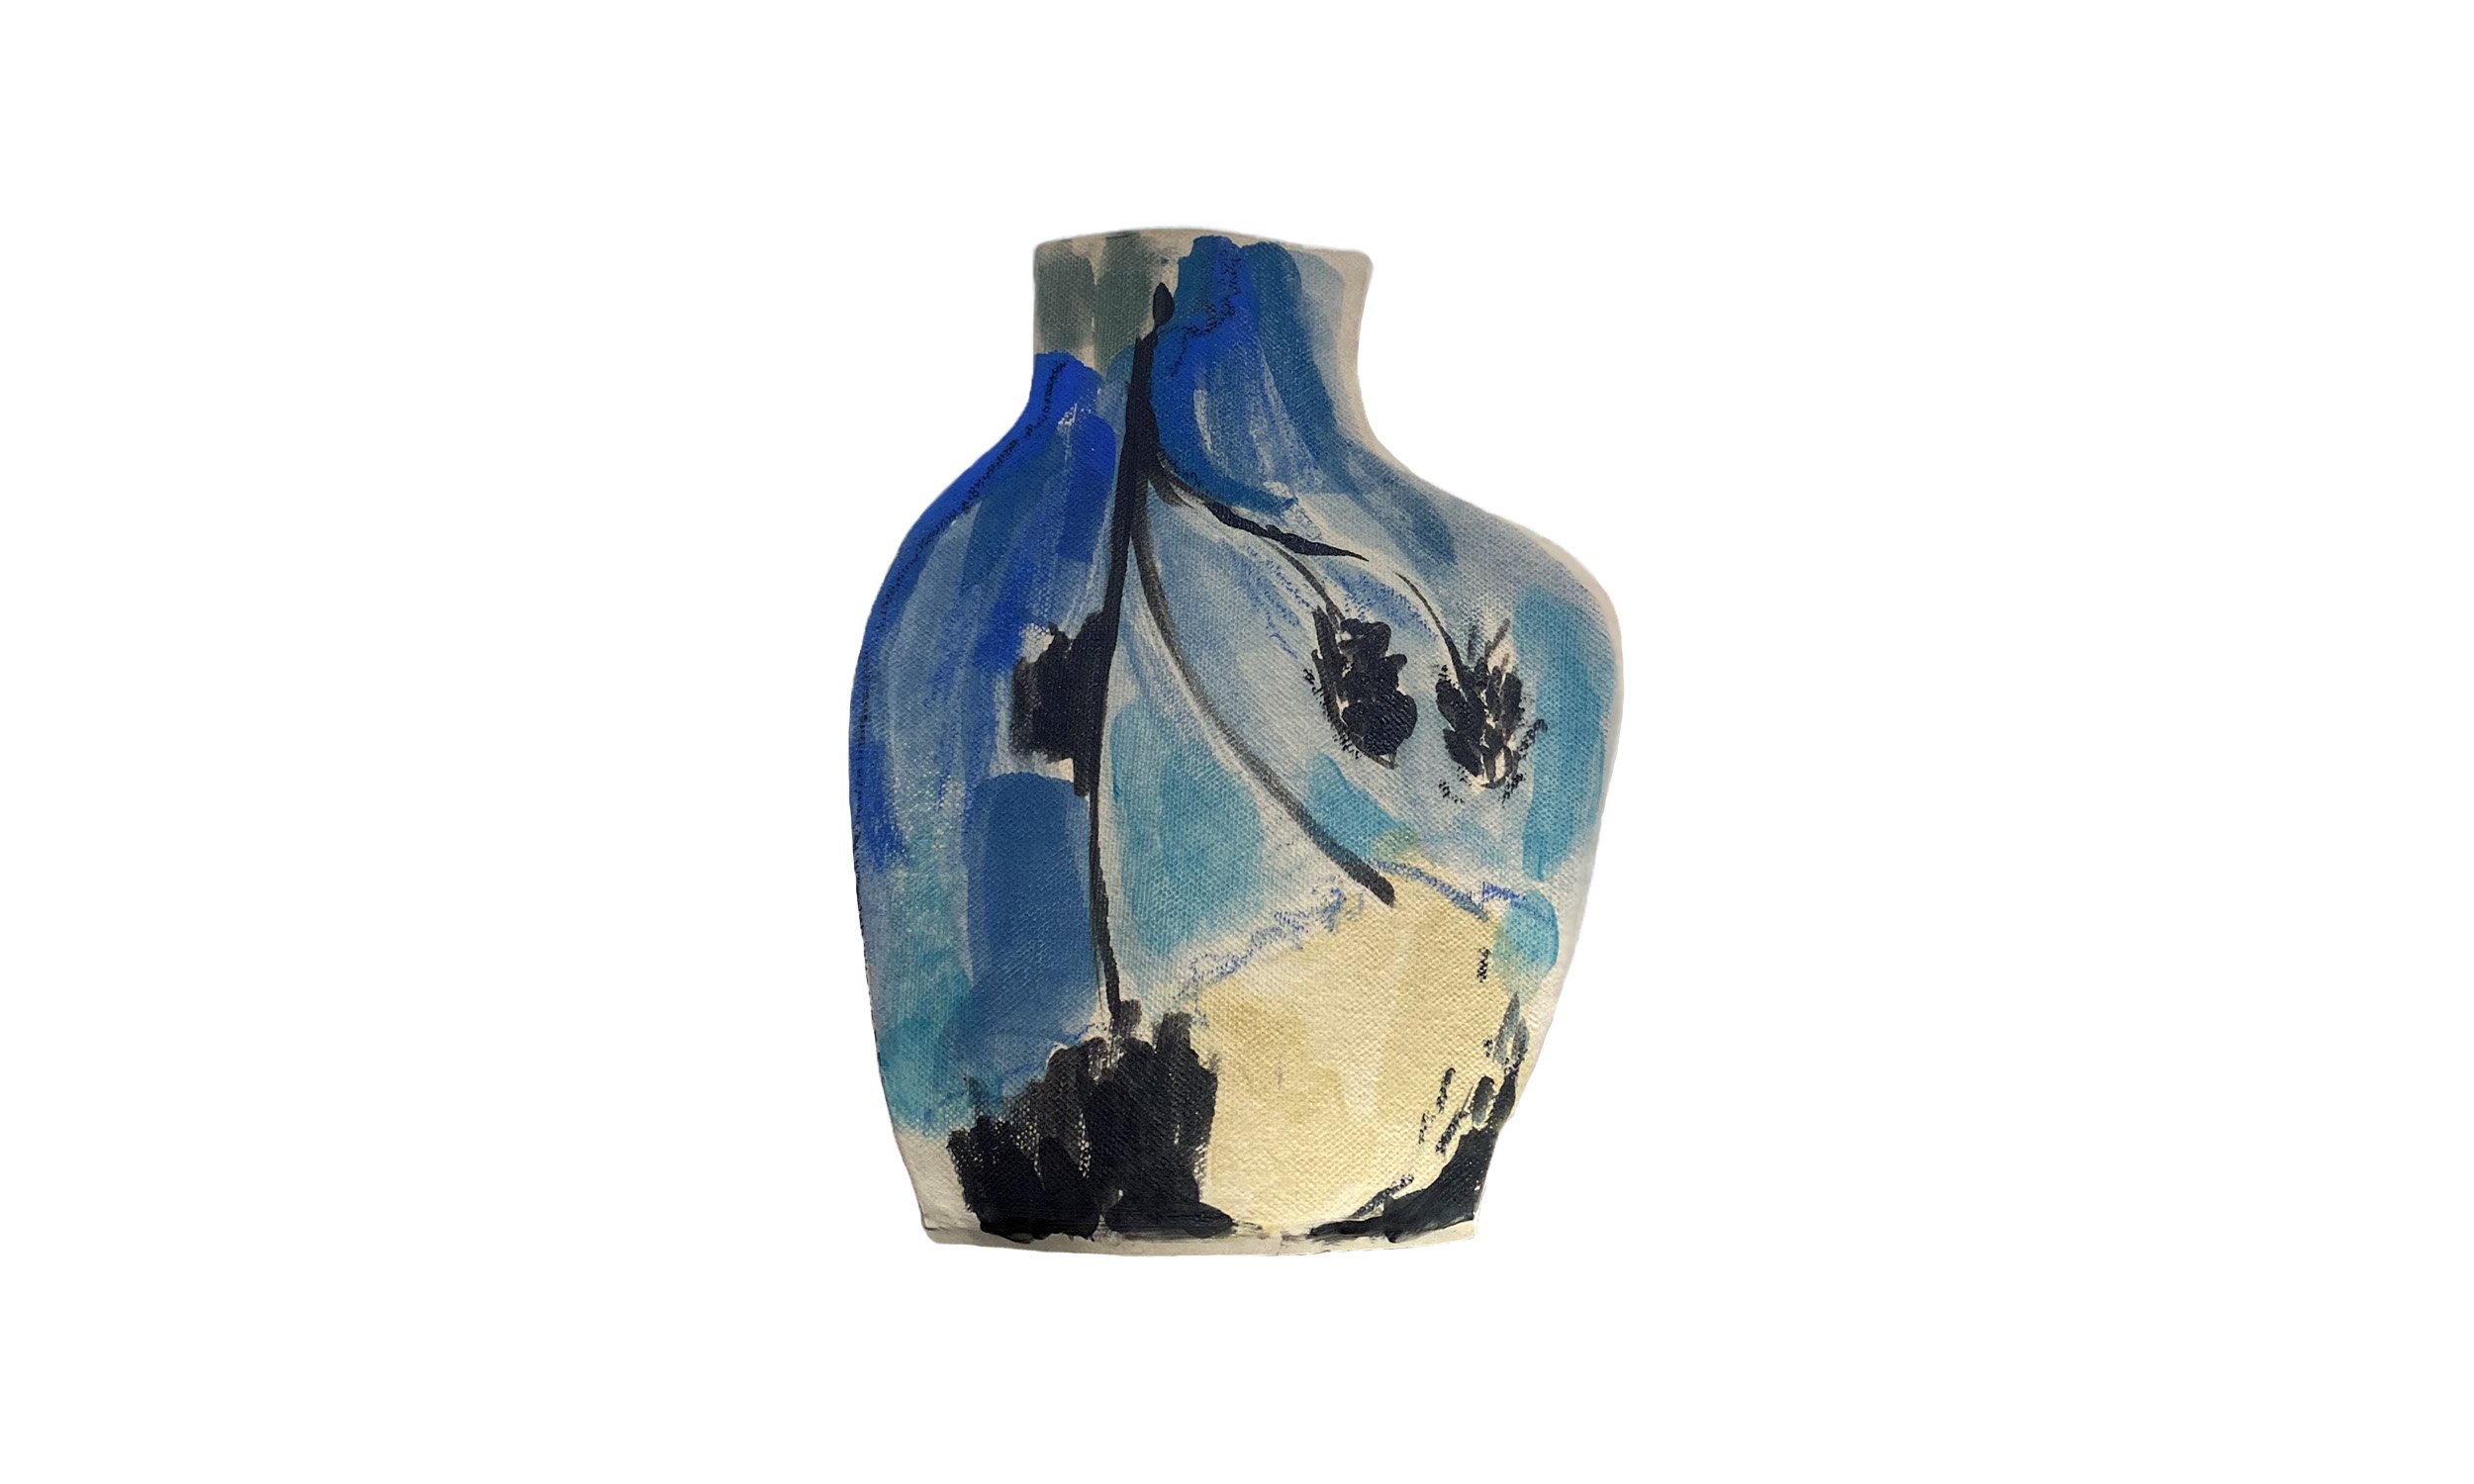 Vase with Landscape, 2022, underglaze on fired stoneware, $250 (Copy)